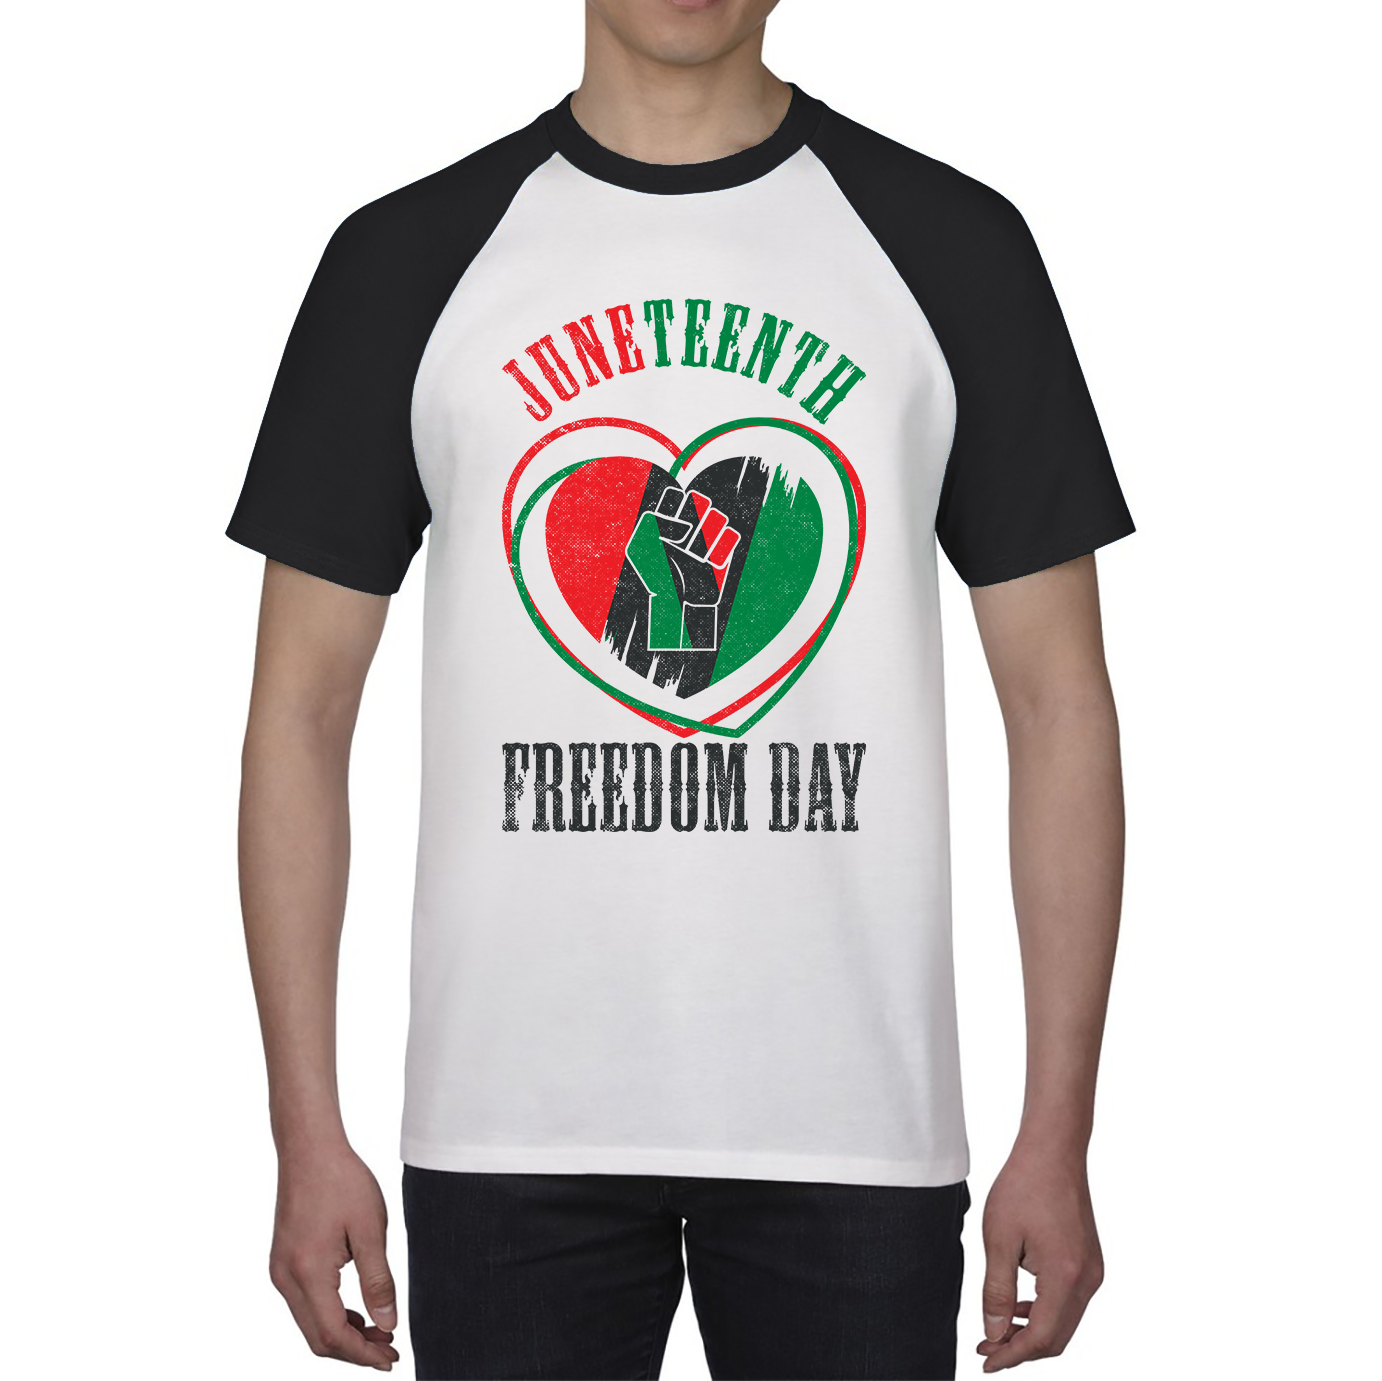 Juneteenth Black Day Freedom King William III British Royal Black History Freedom Baseball T Shirt